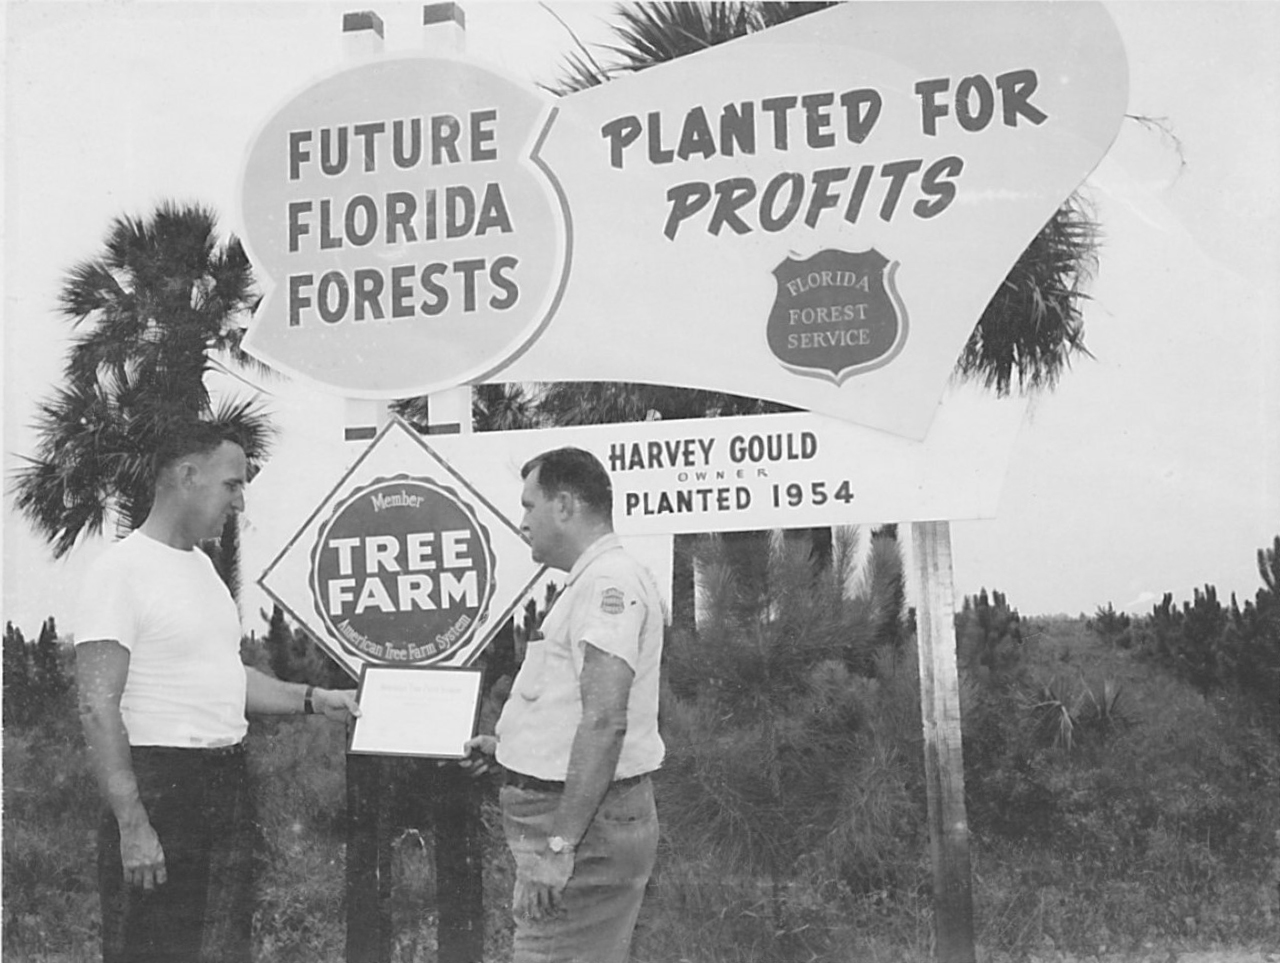 Tree Farming runs in the Gould's family